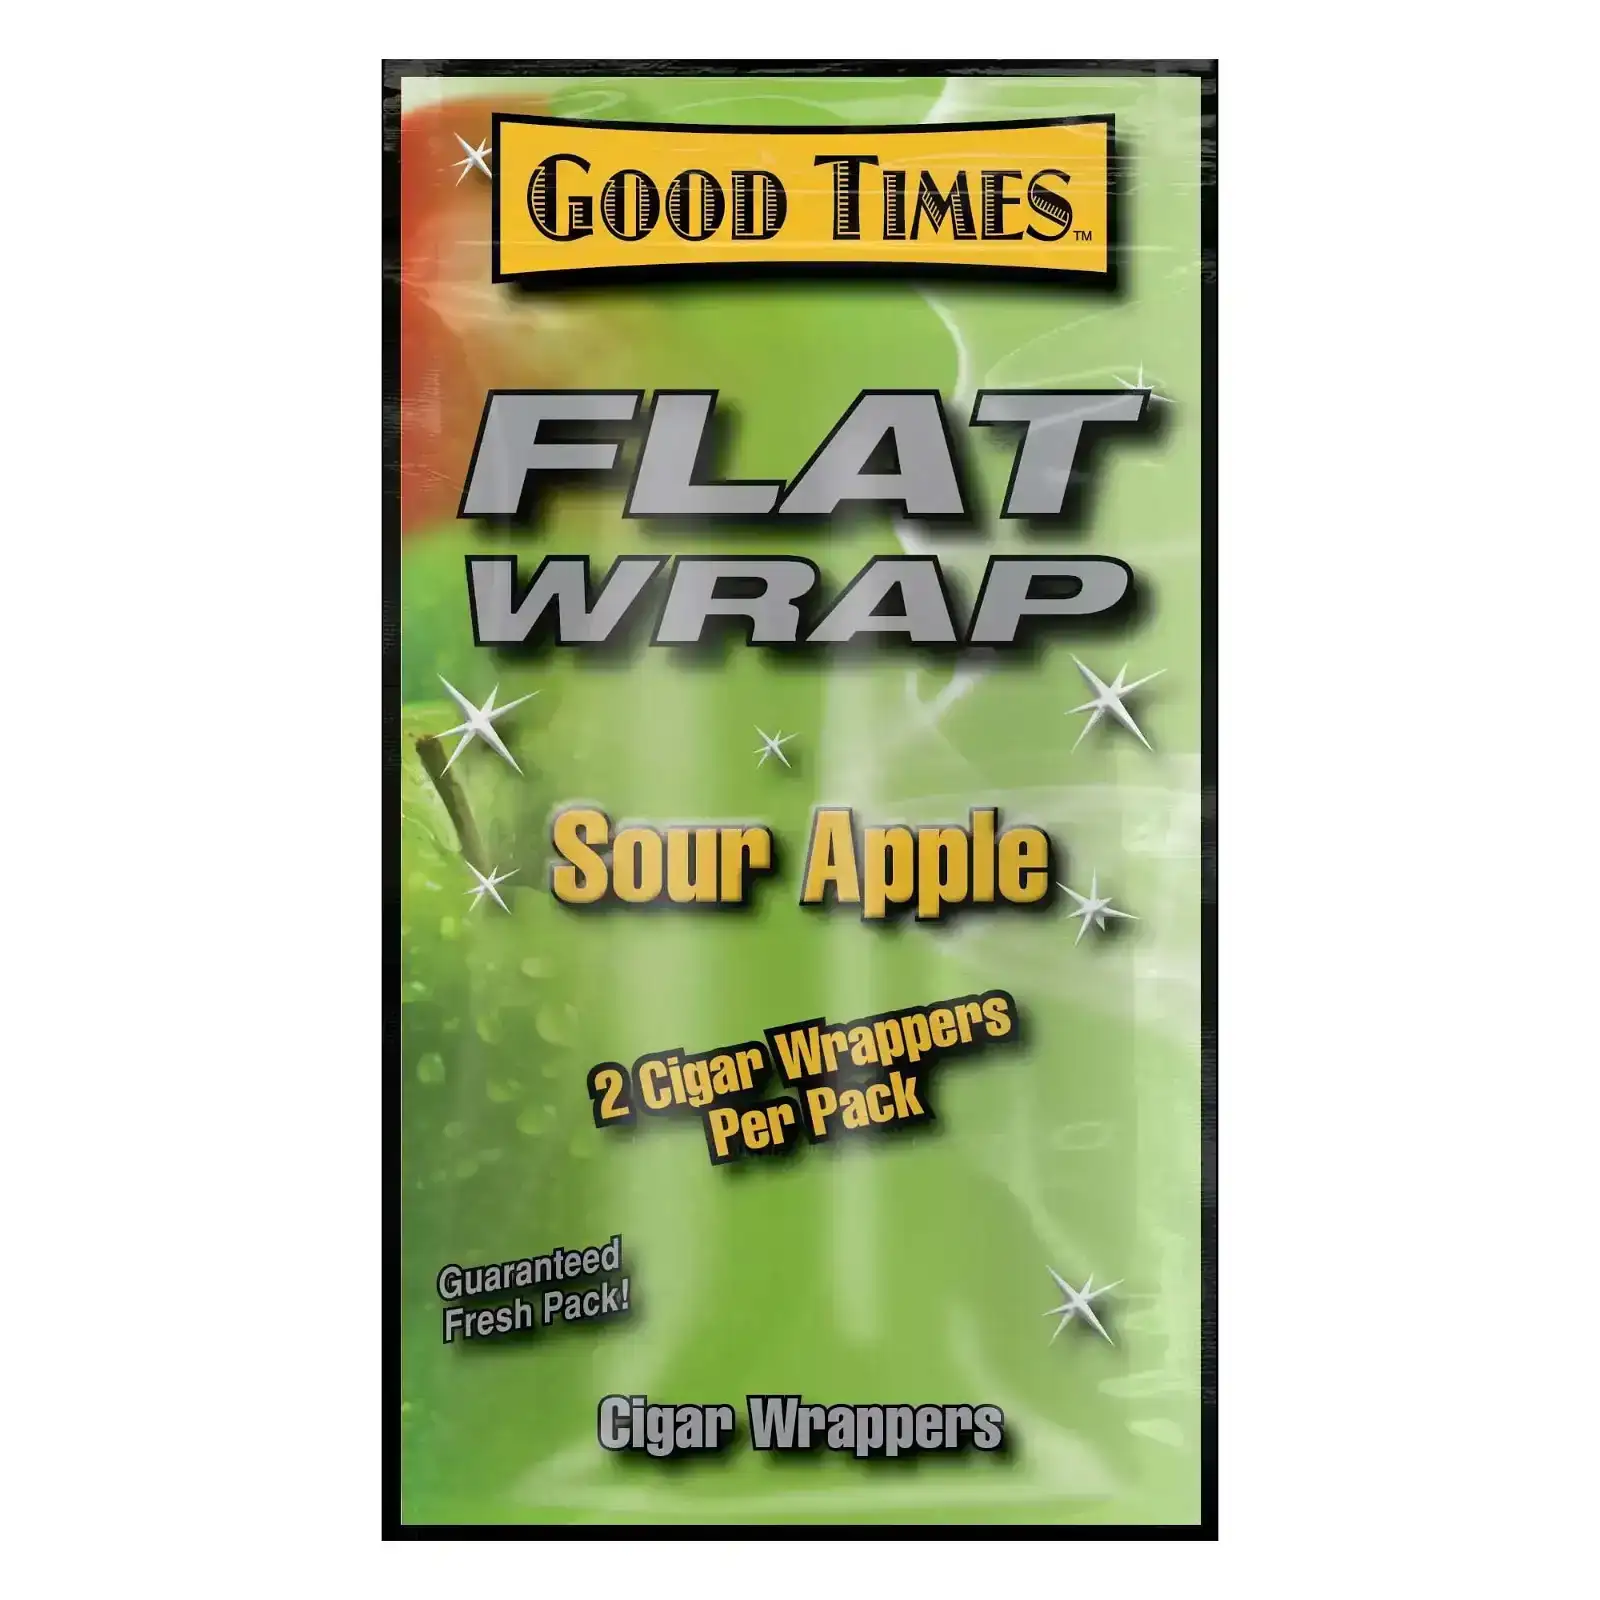 Good Times Sour Apple Flat Wraps